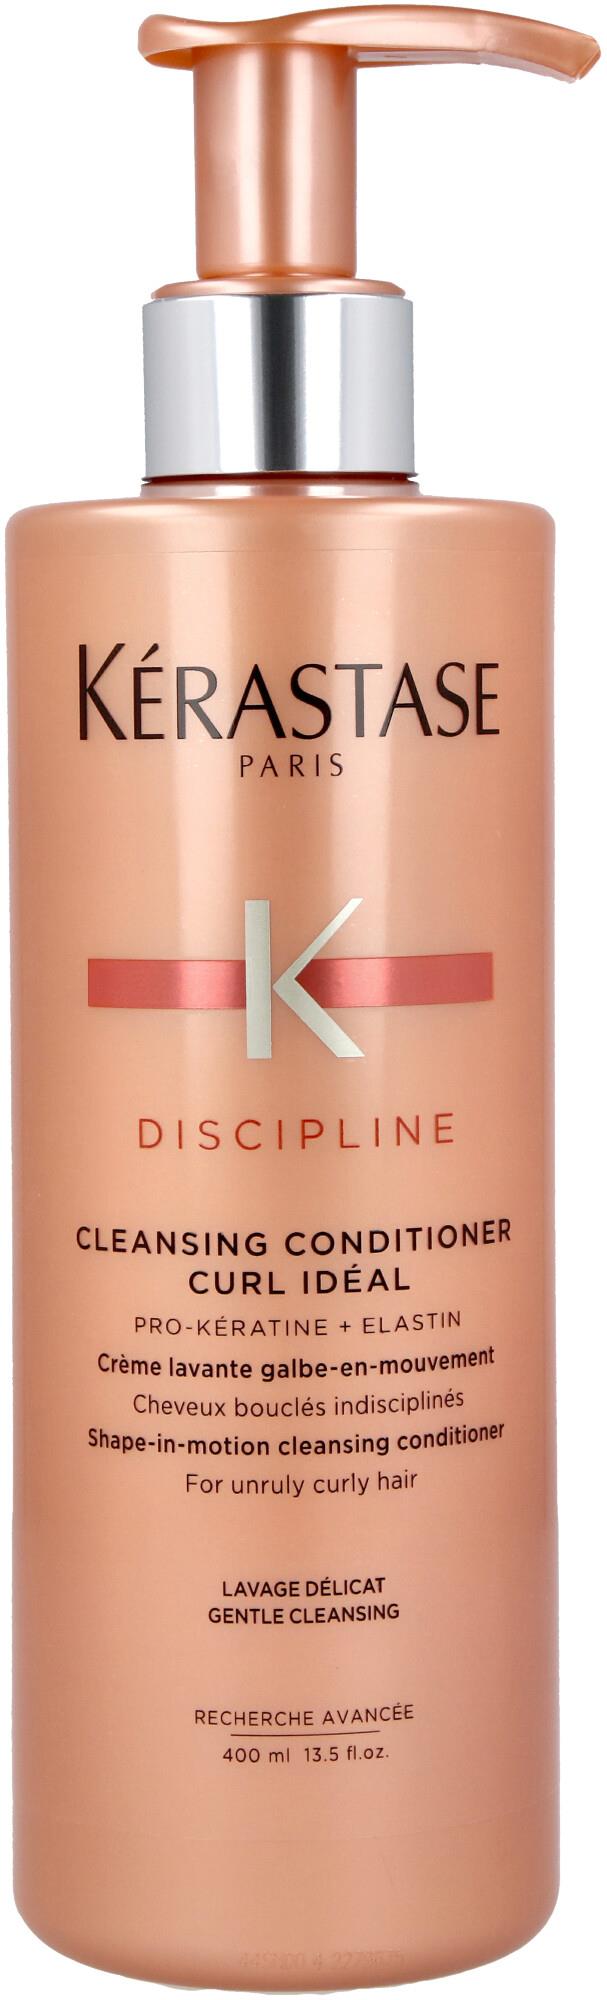 pølse Creed Dwell Kérastase Discipline Curl Idéal Cleansing Conditioner shampoo | lyko.com